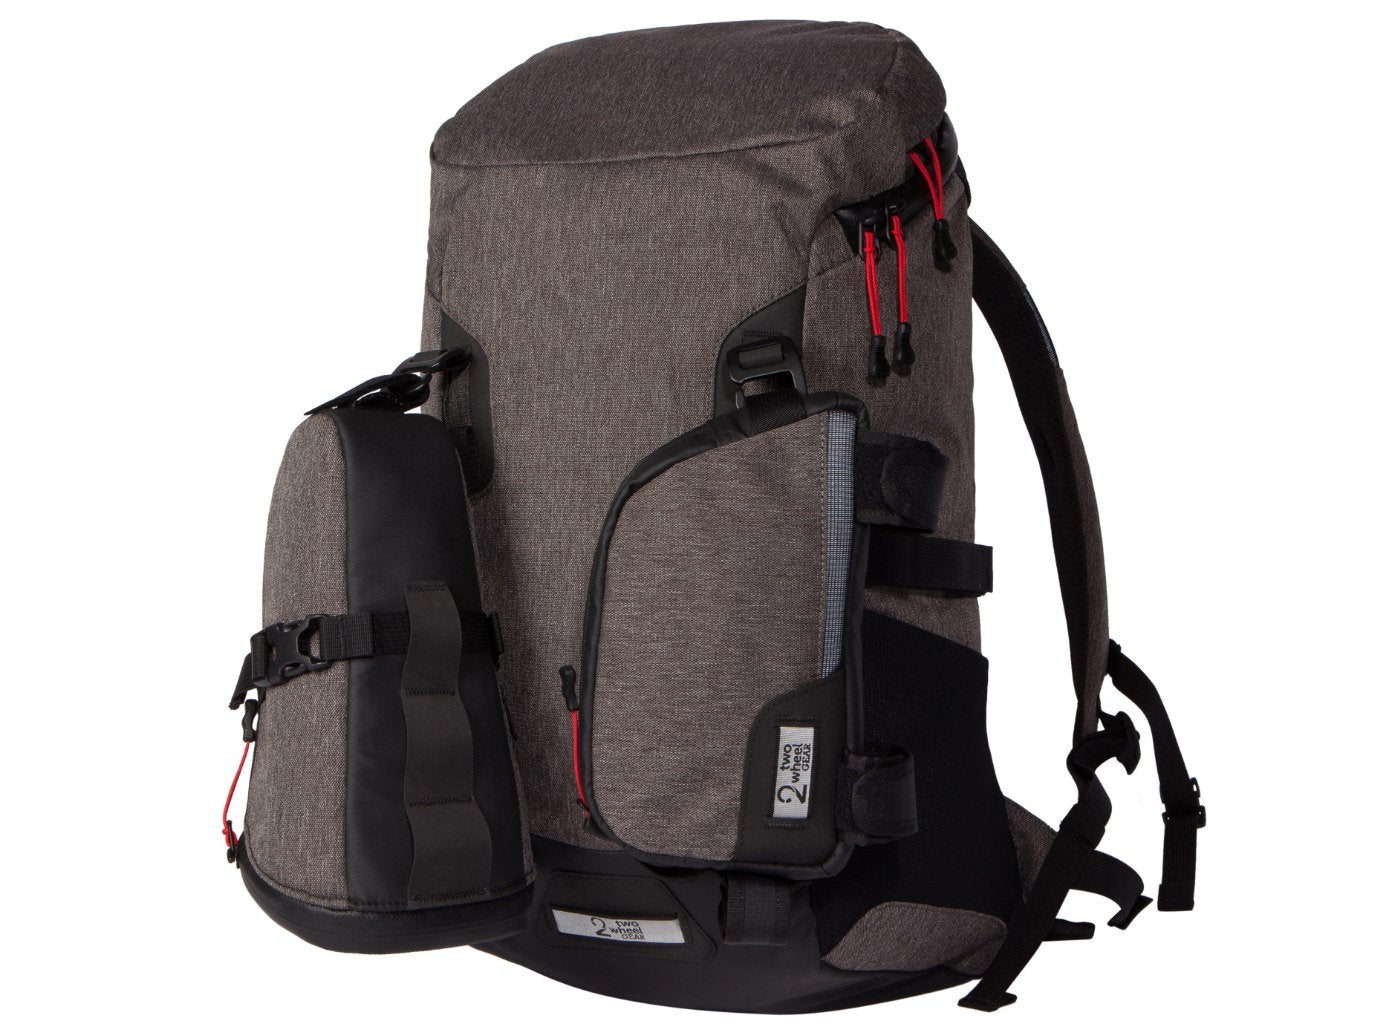 Buy Nixon Small Landlock SE Backpack Men's Cobalt at Amazon.in